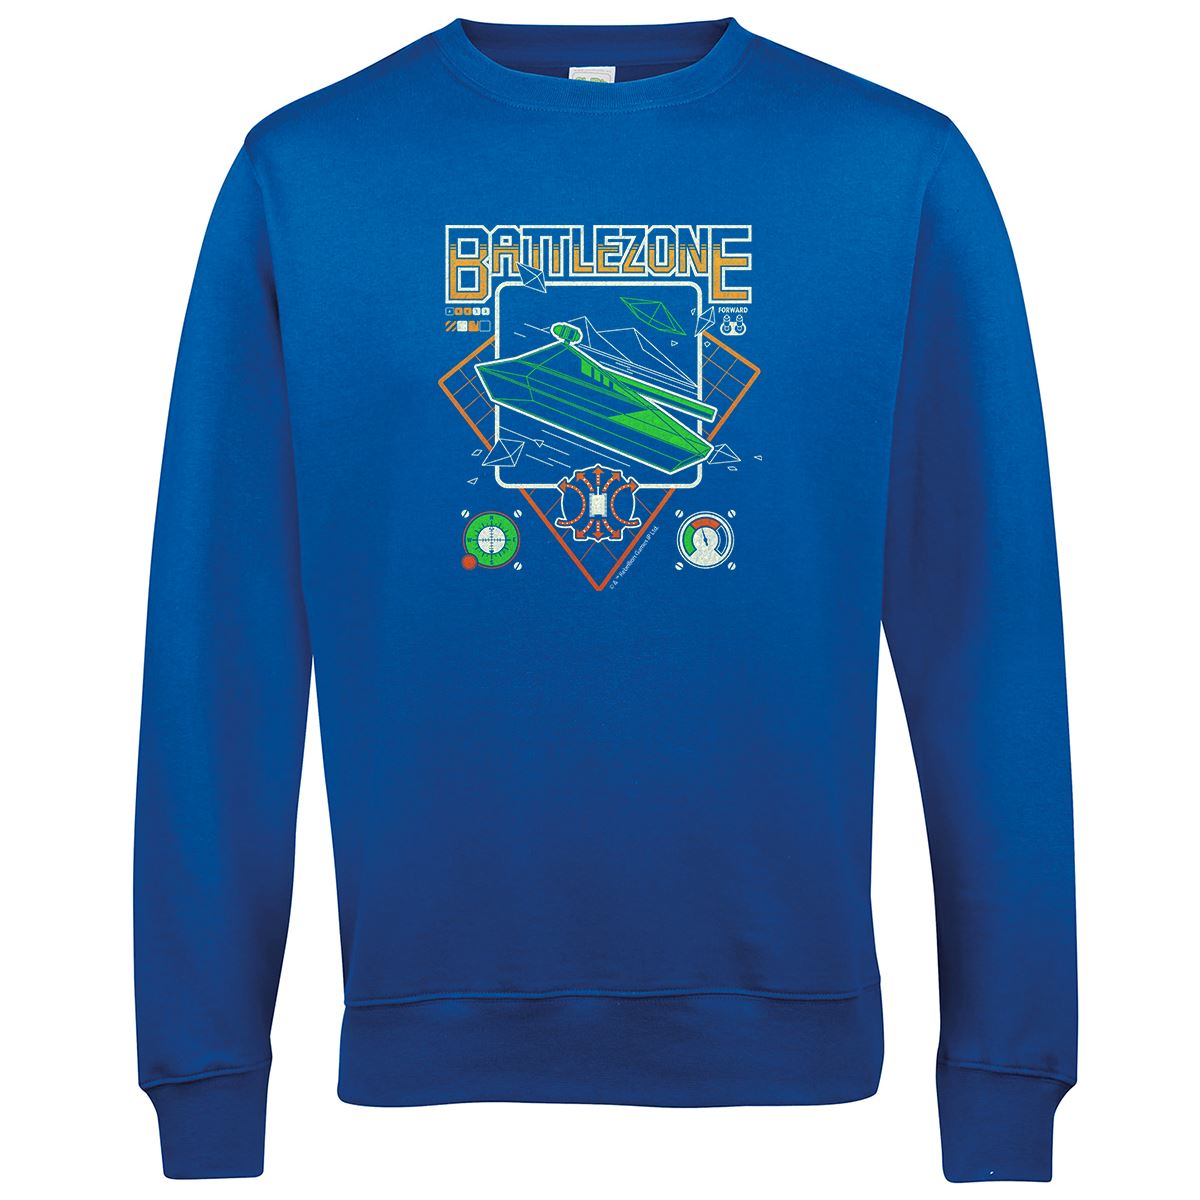 Battlezone Retro Gaming Sweatshirt Sweatshirt Seven Squared Small Royal Blue 